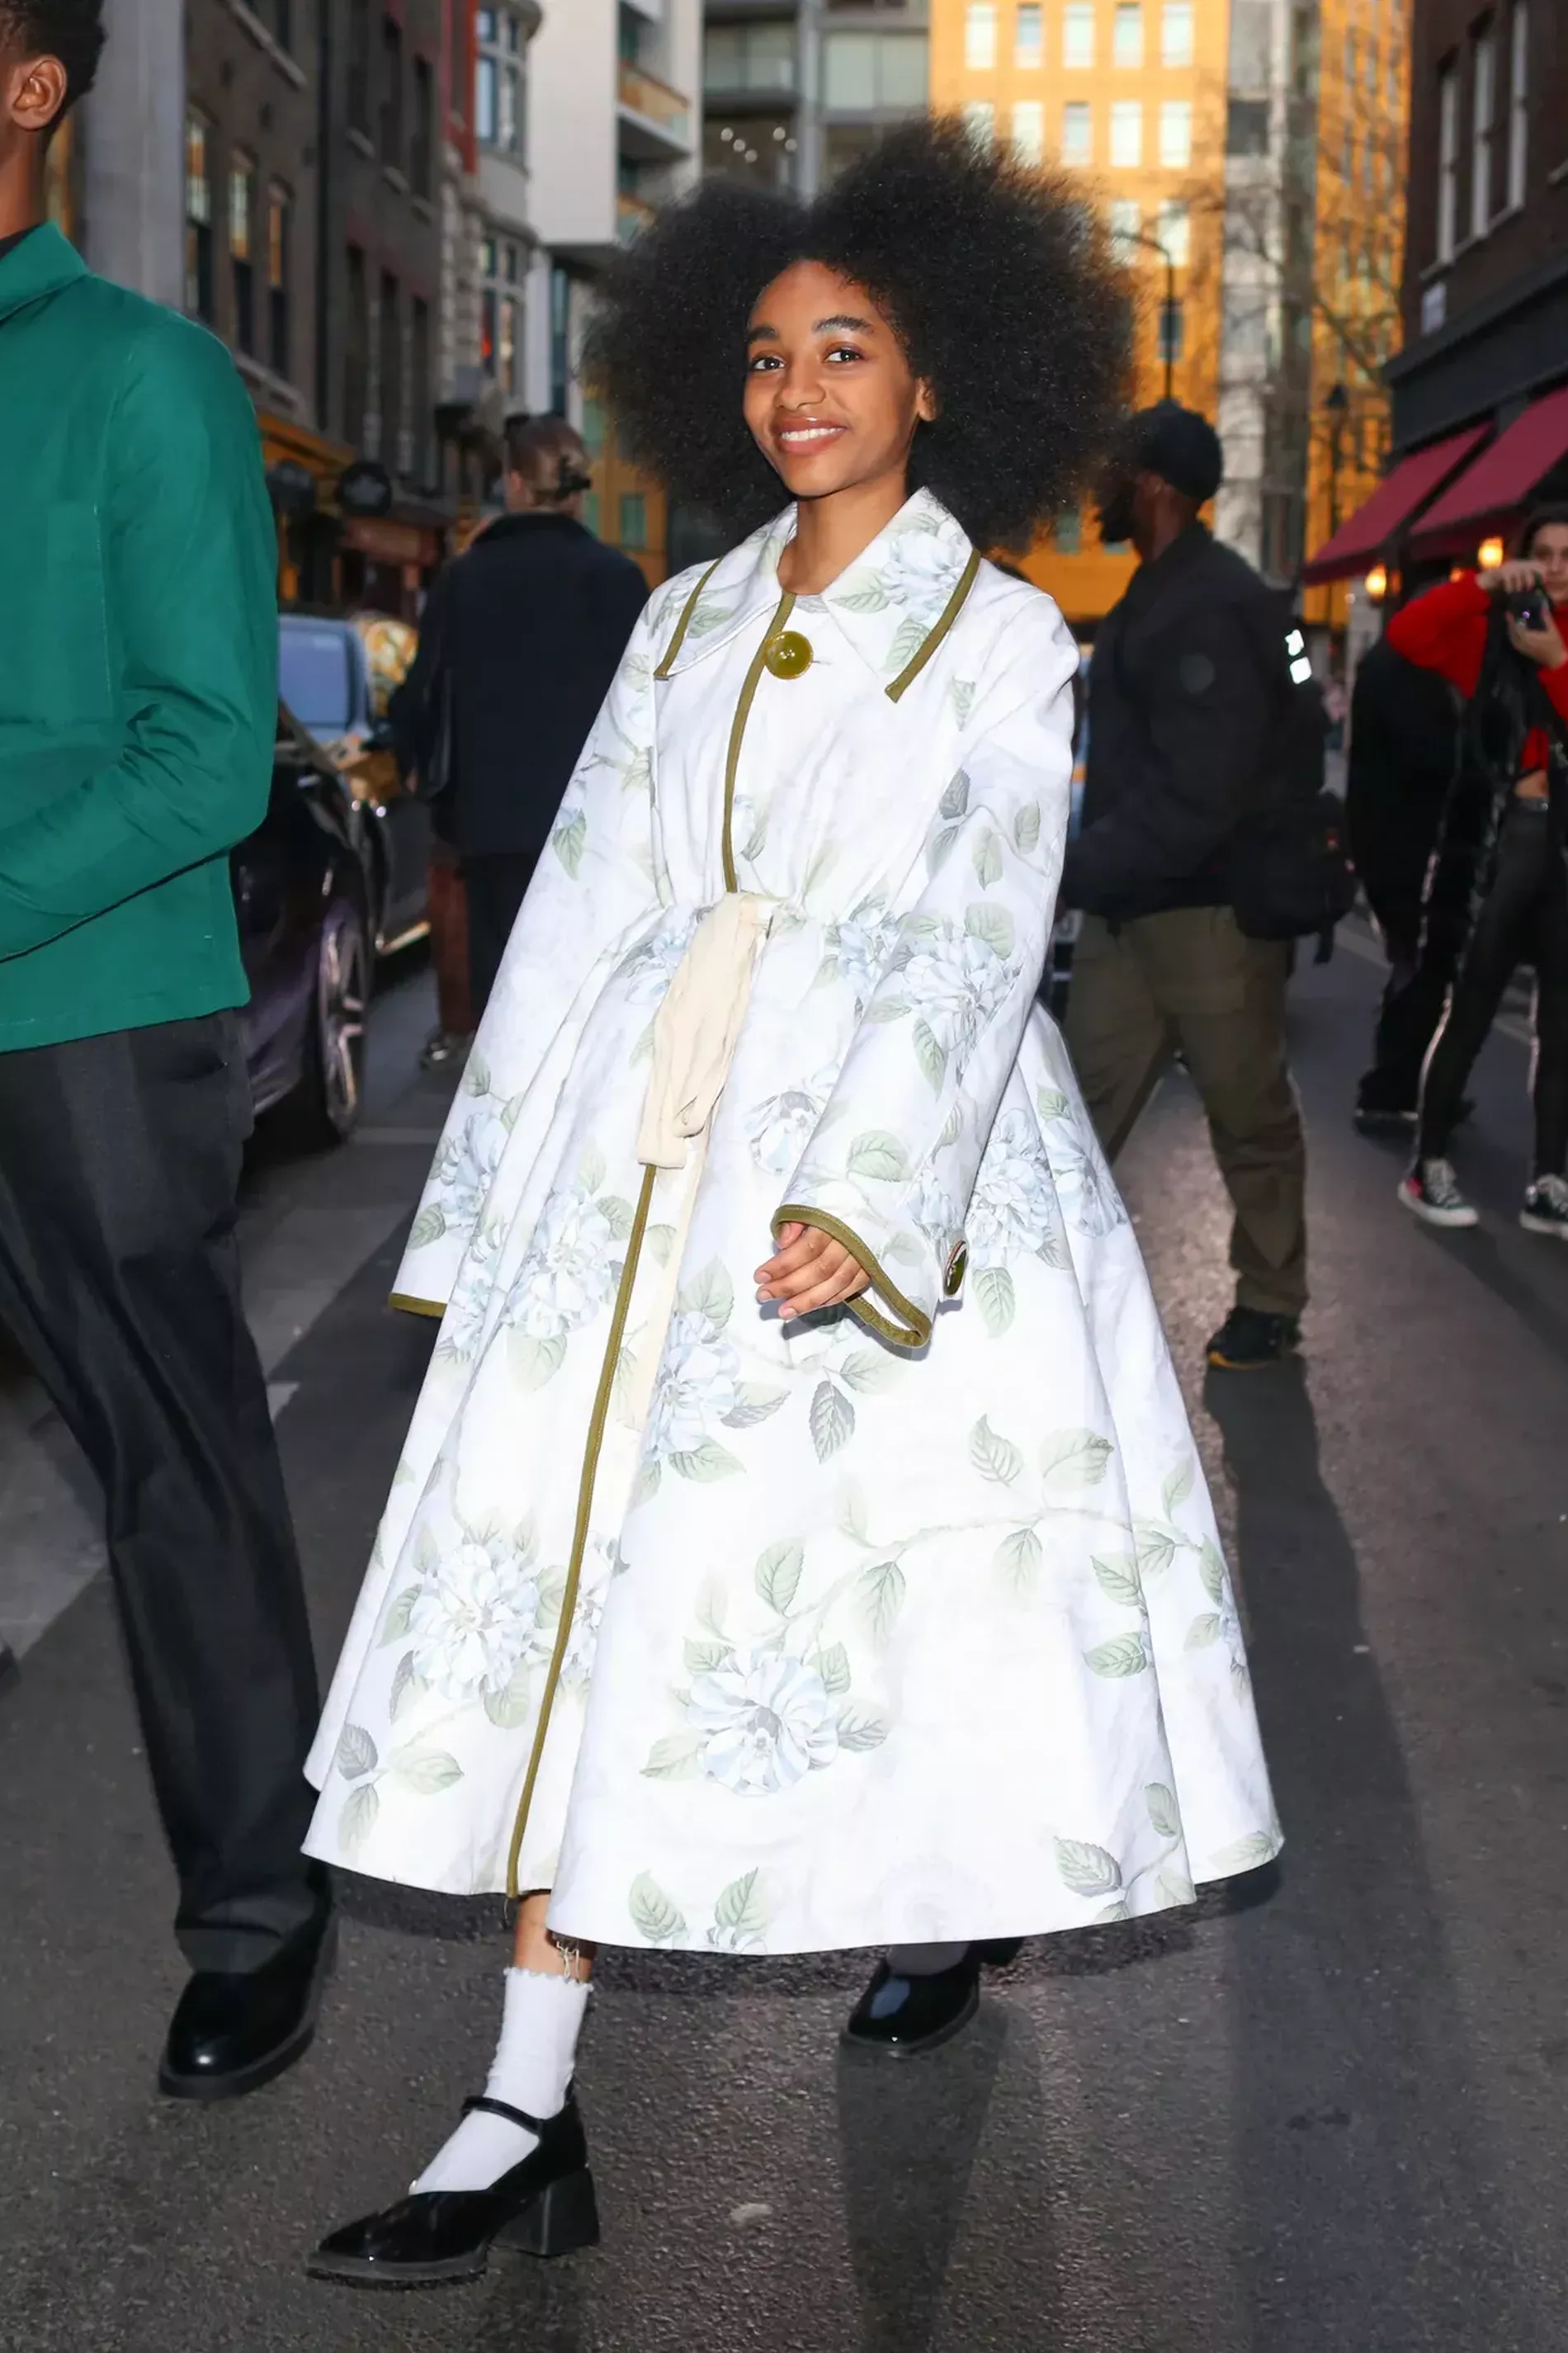 London fashion week guest wears puffy floral coat 